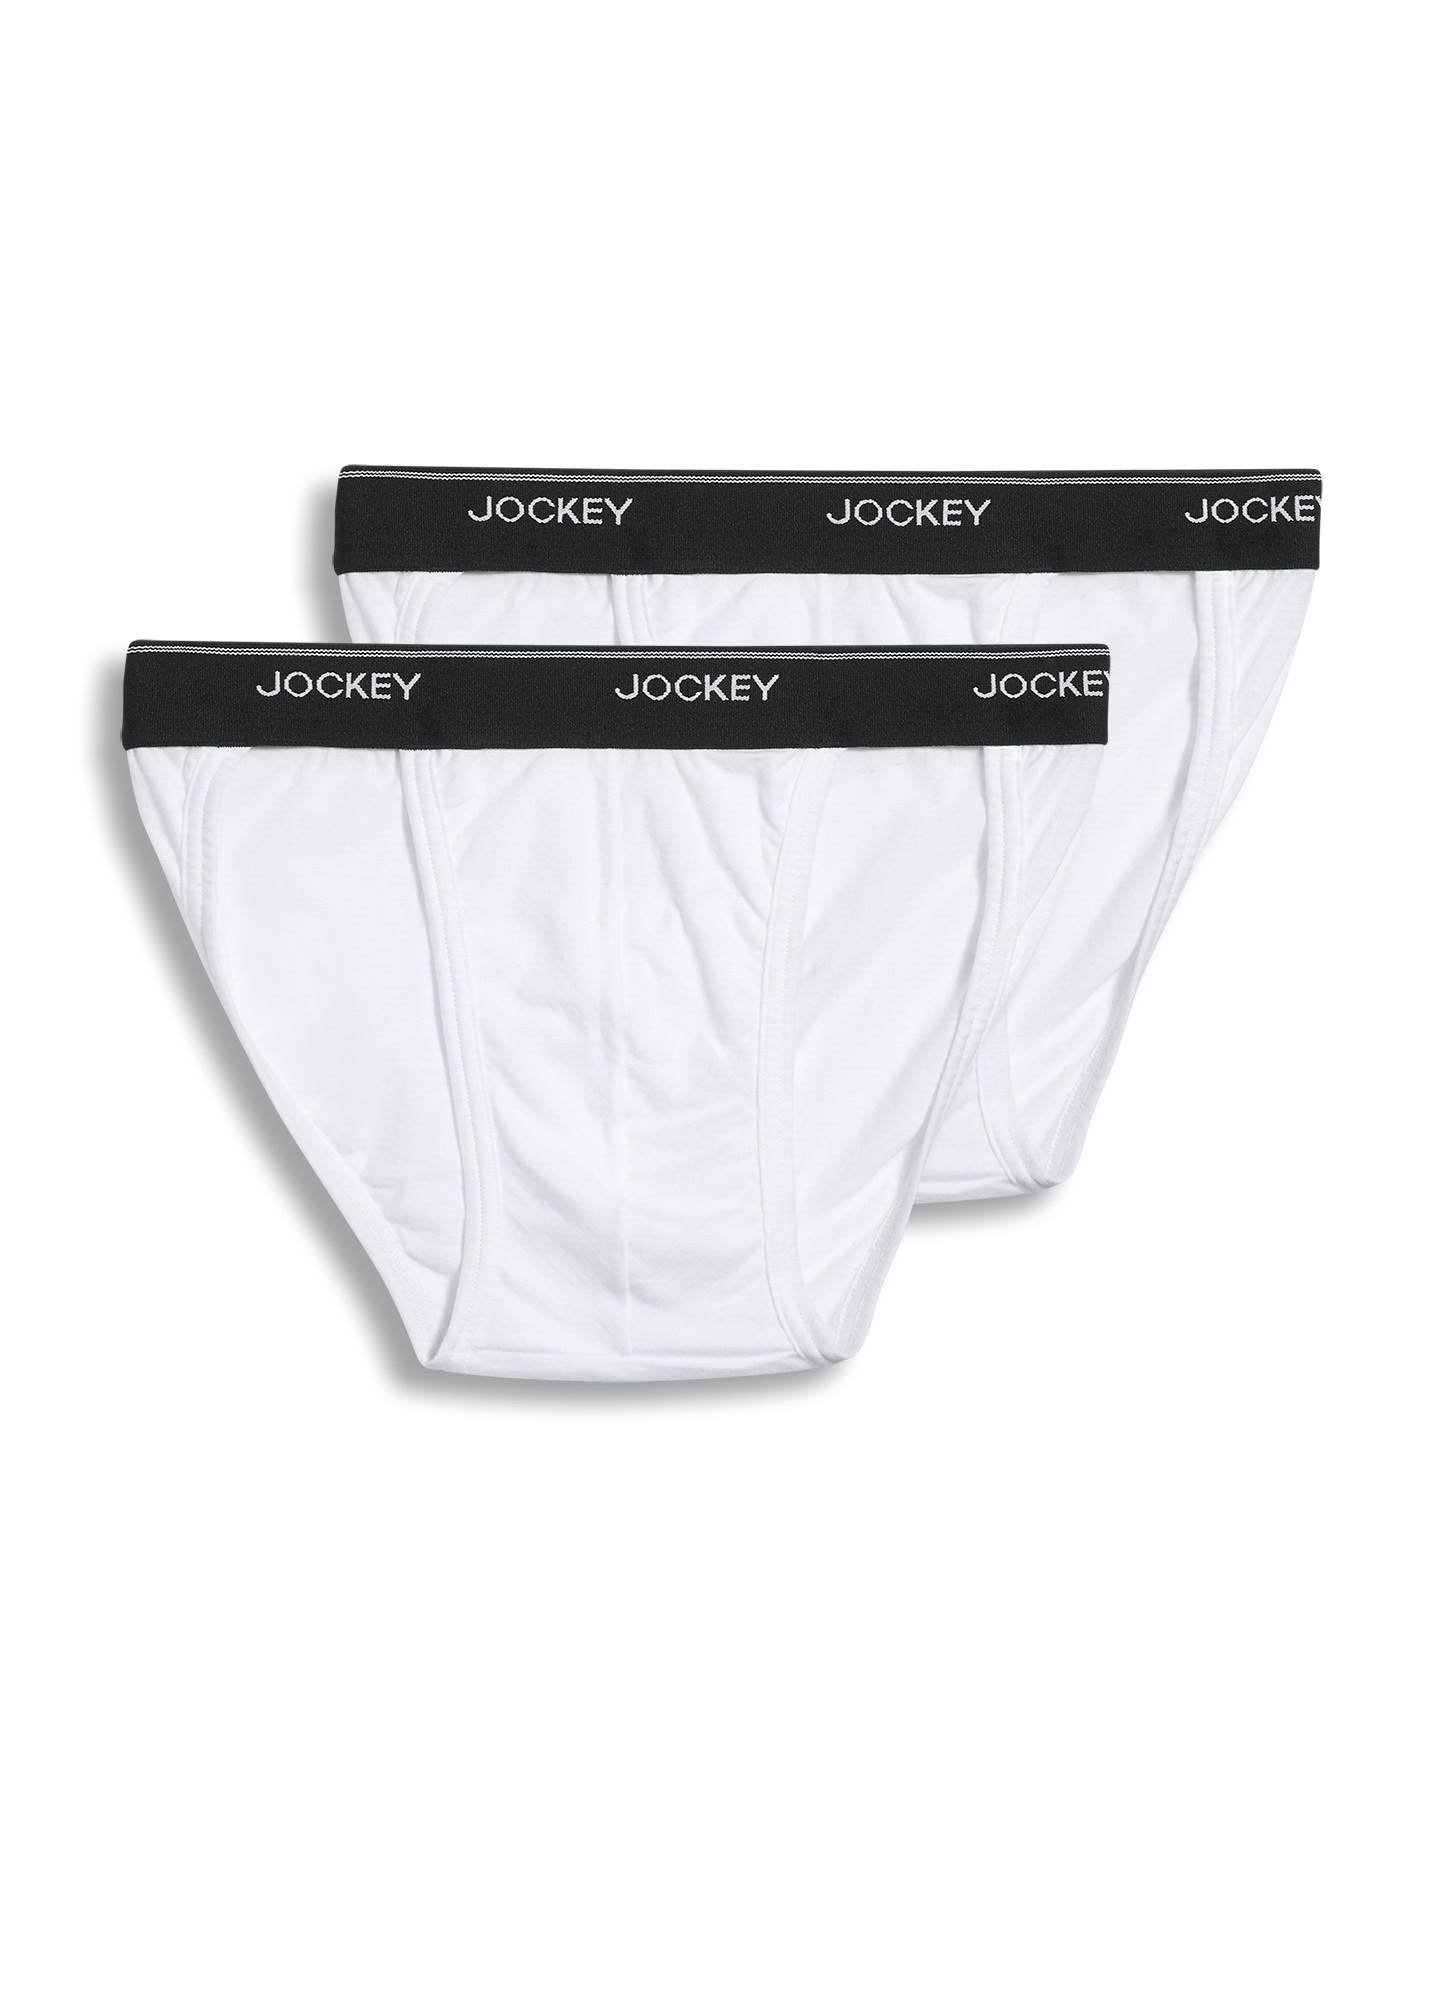 JOCKEY, MEN'S ELANCE BRIEF 2PC SET, Color : White, Size : M